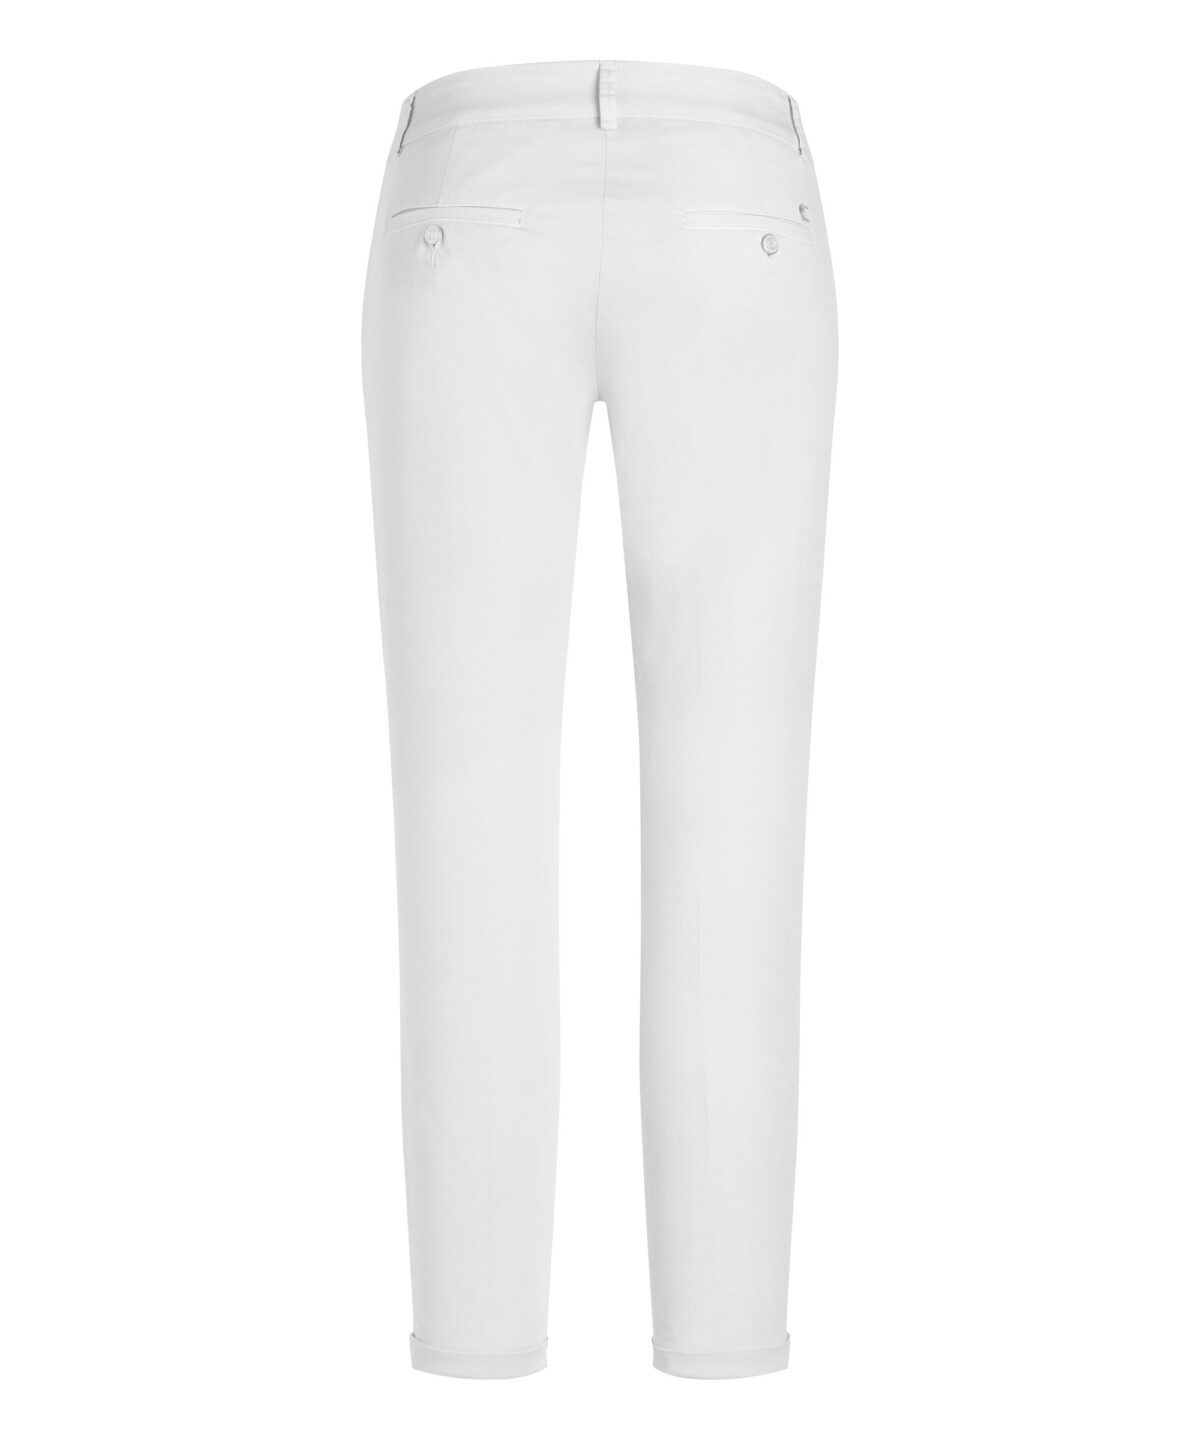 Cambio bukser Stella hvid 1